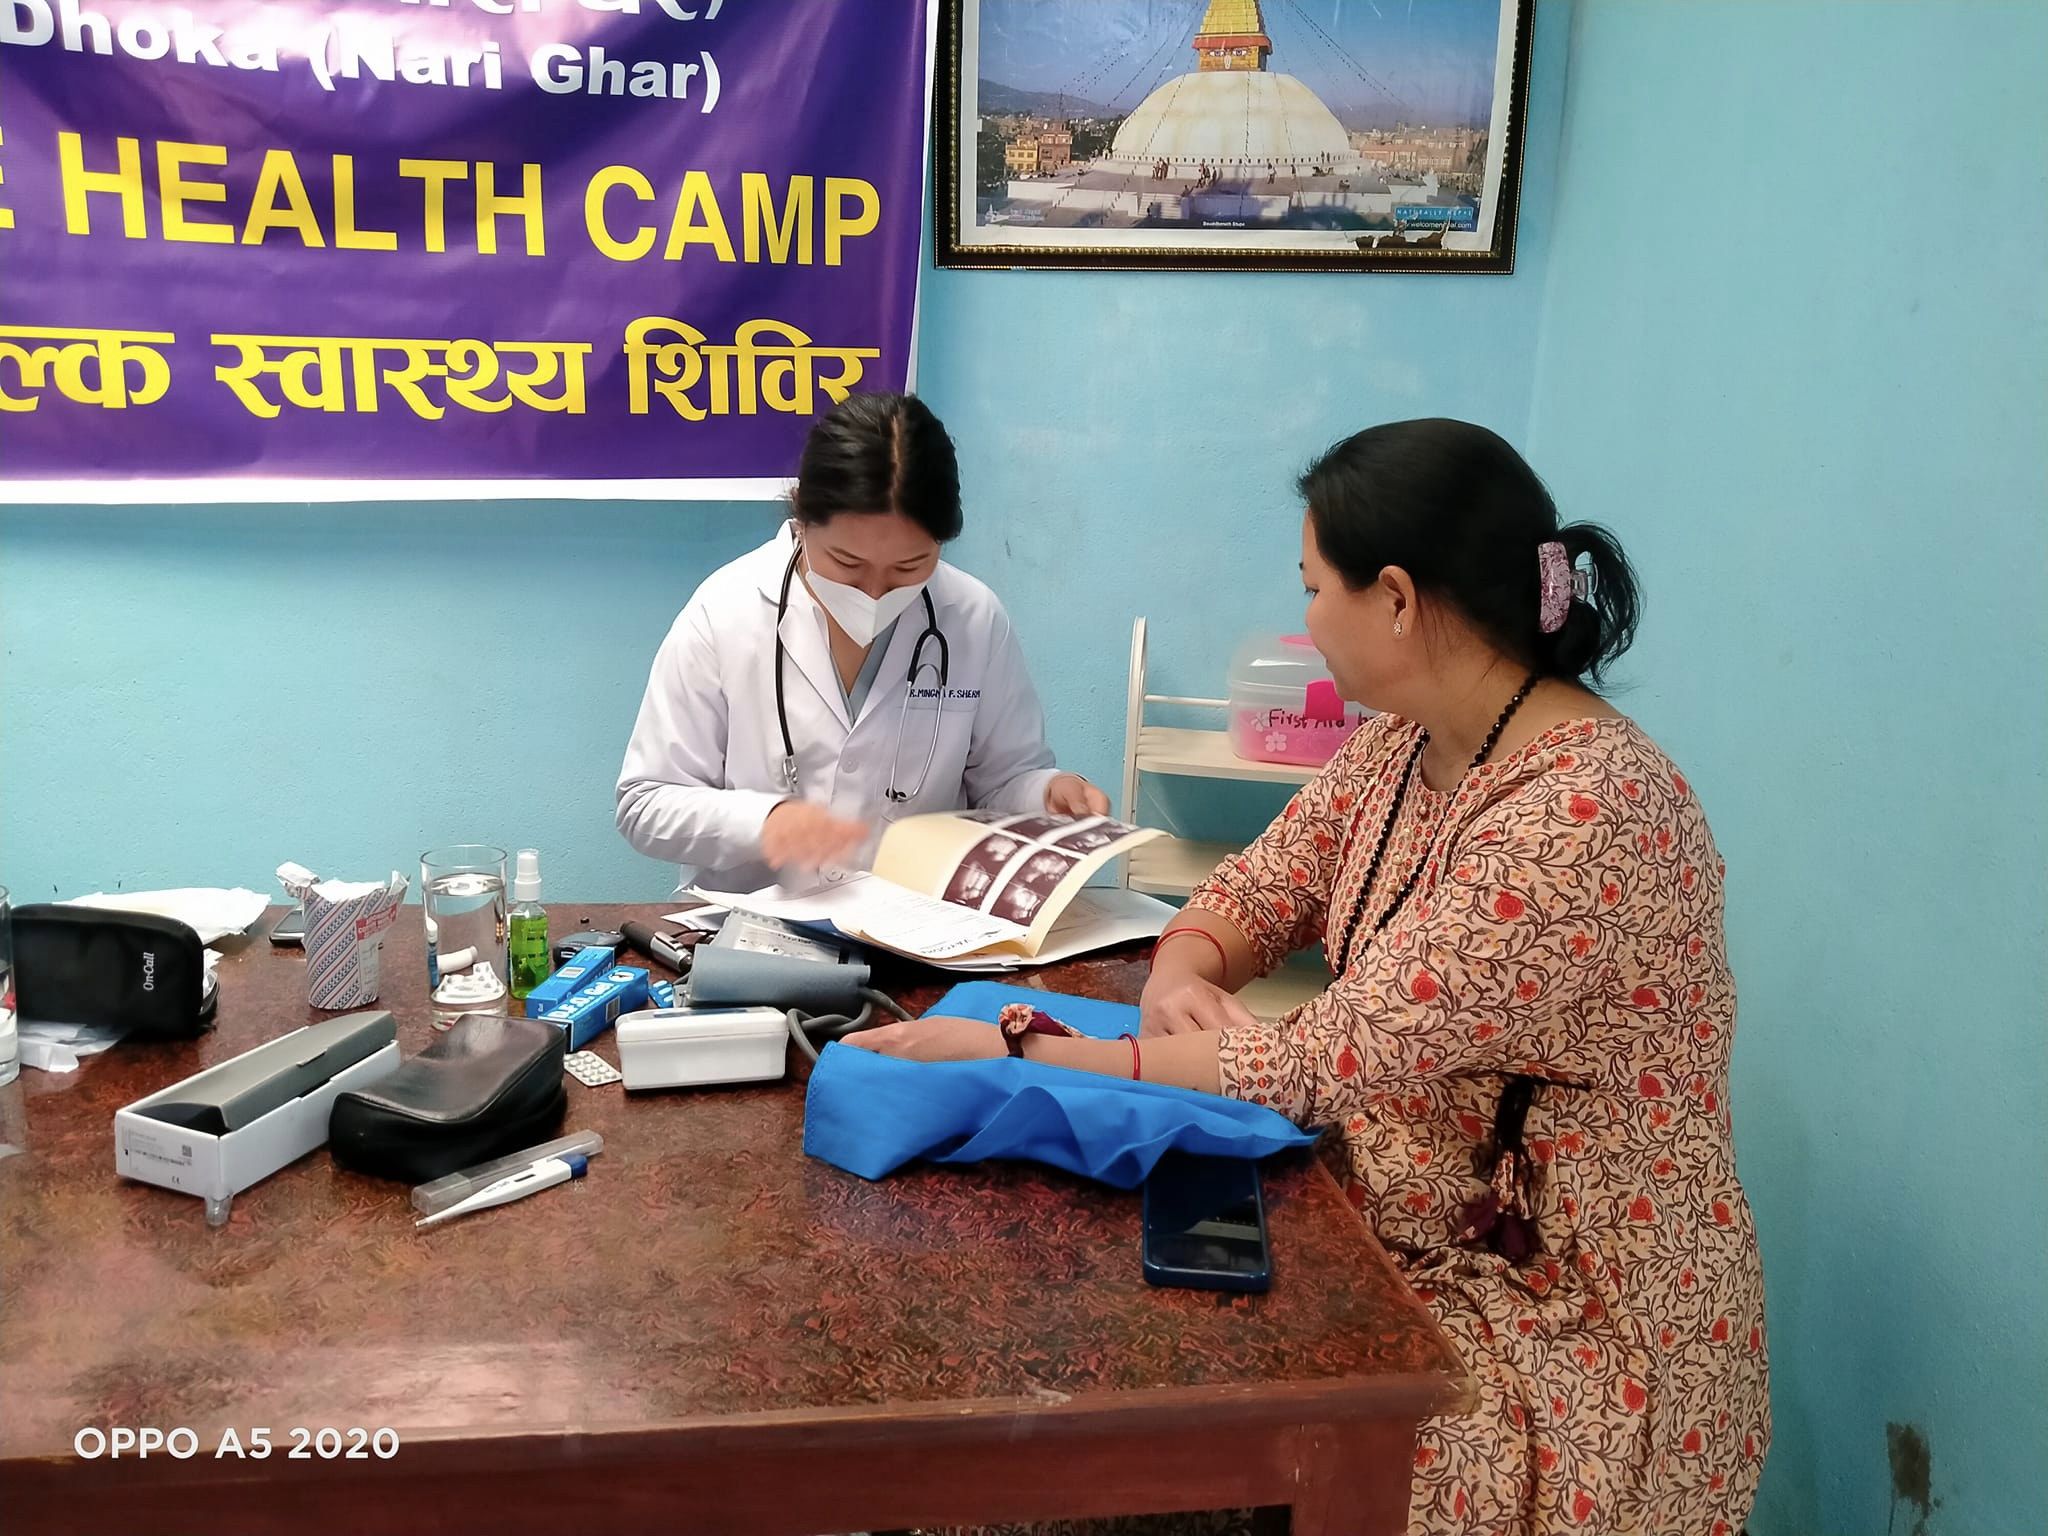 Health camp mit Dr. Mingma Sherpa